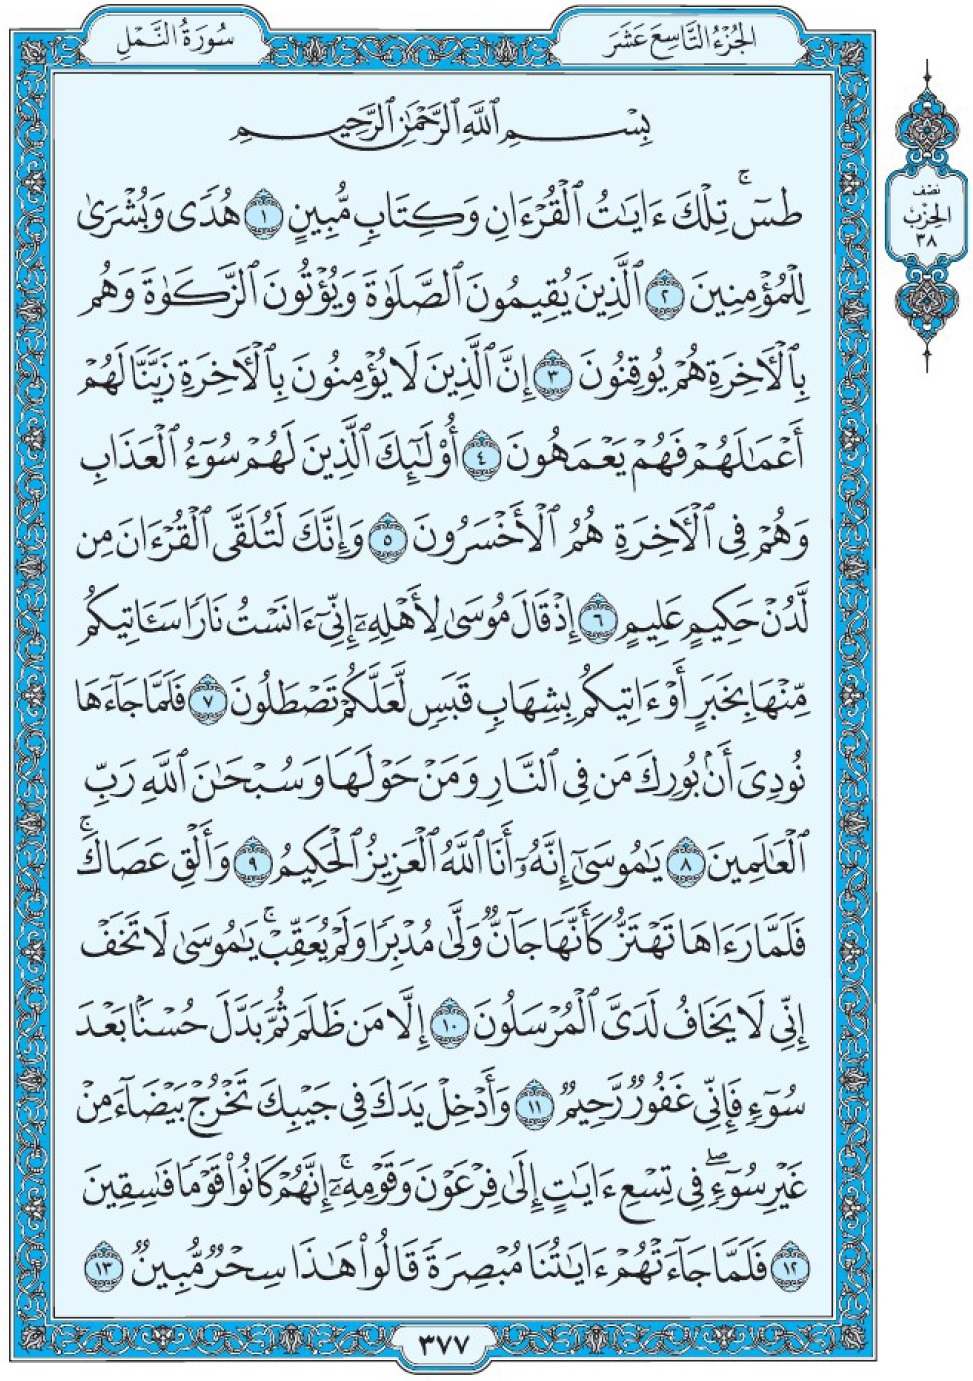 Коран Мединский мусхаф страница 377, сура 27 Ан-Намль سورة ٢٧ النمل 